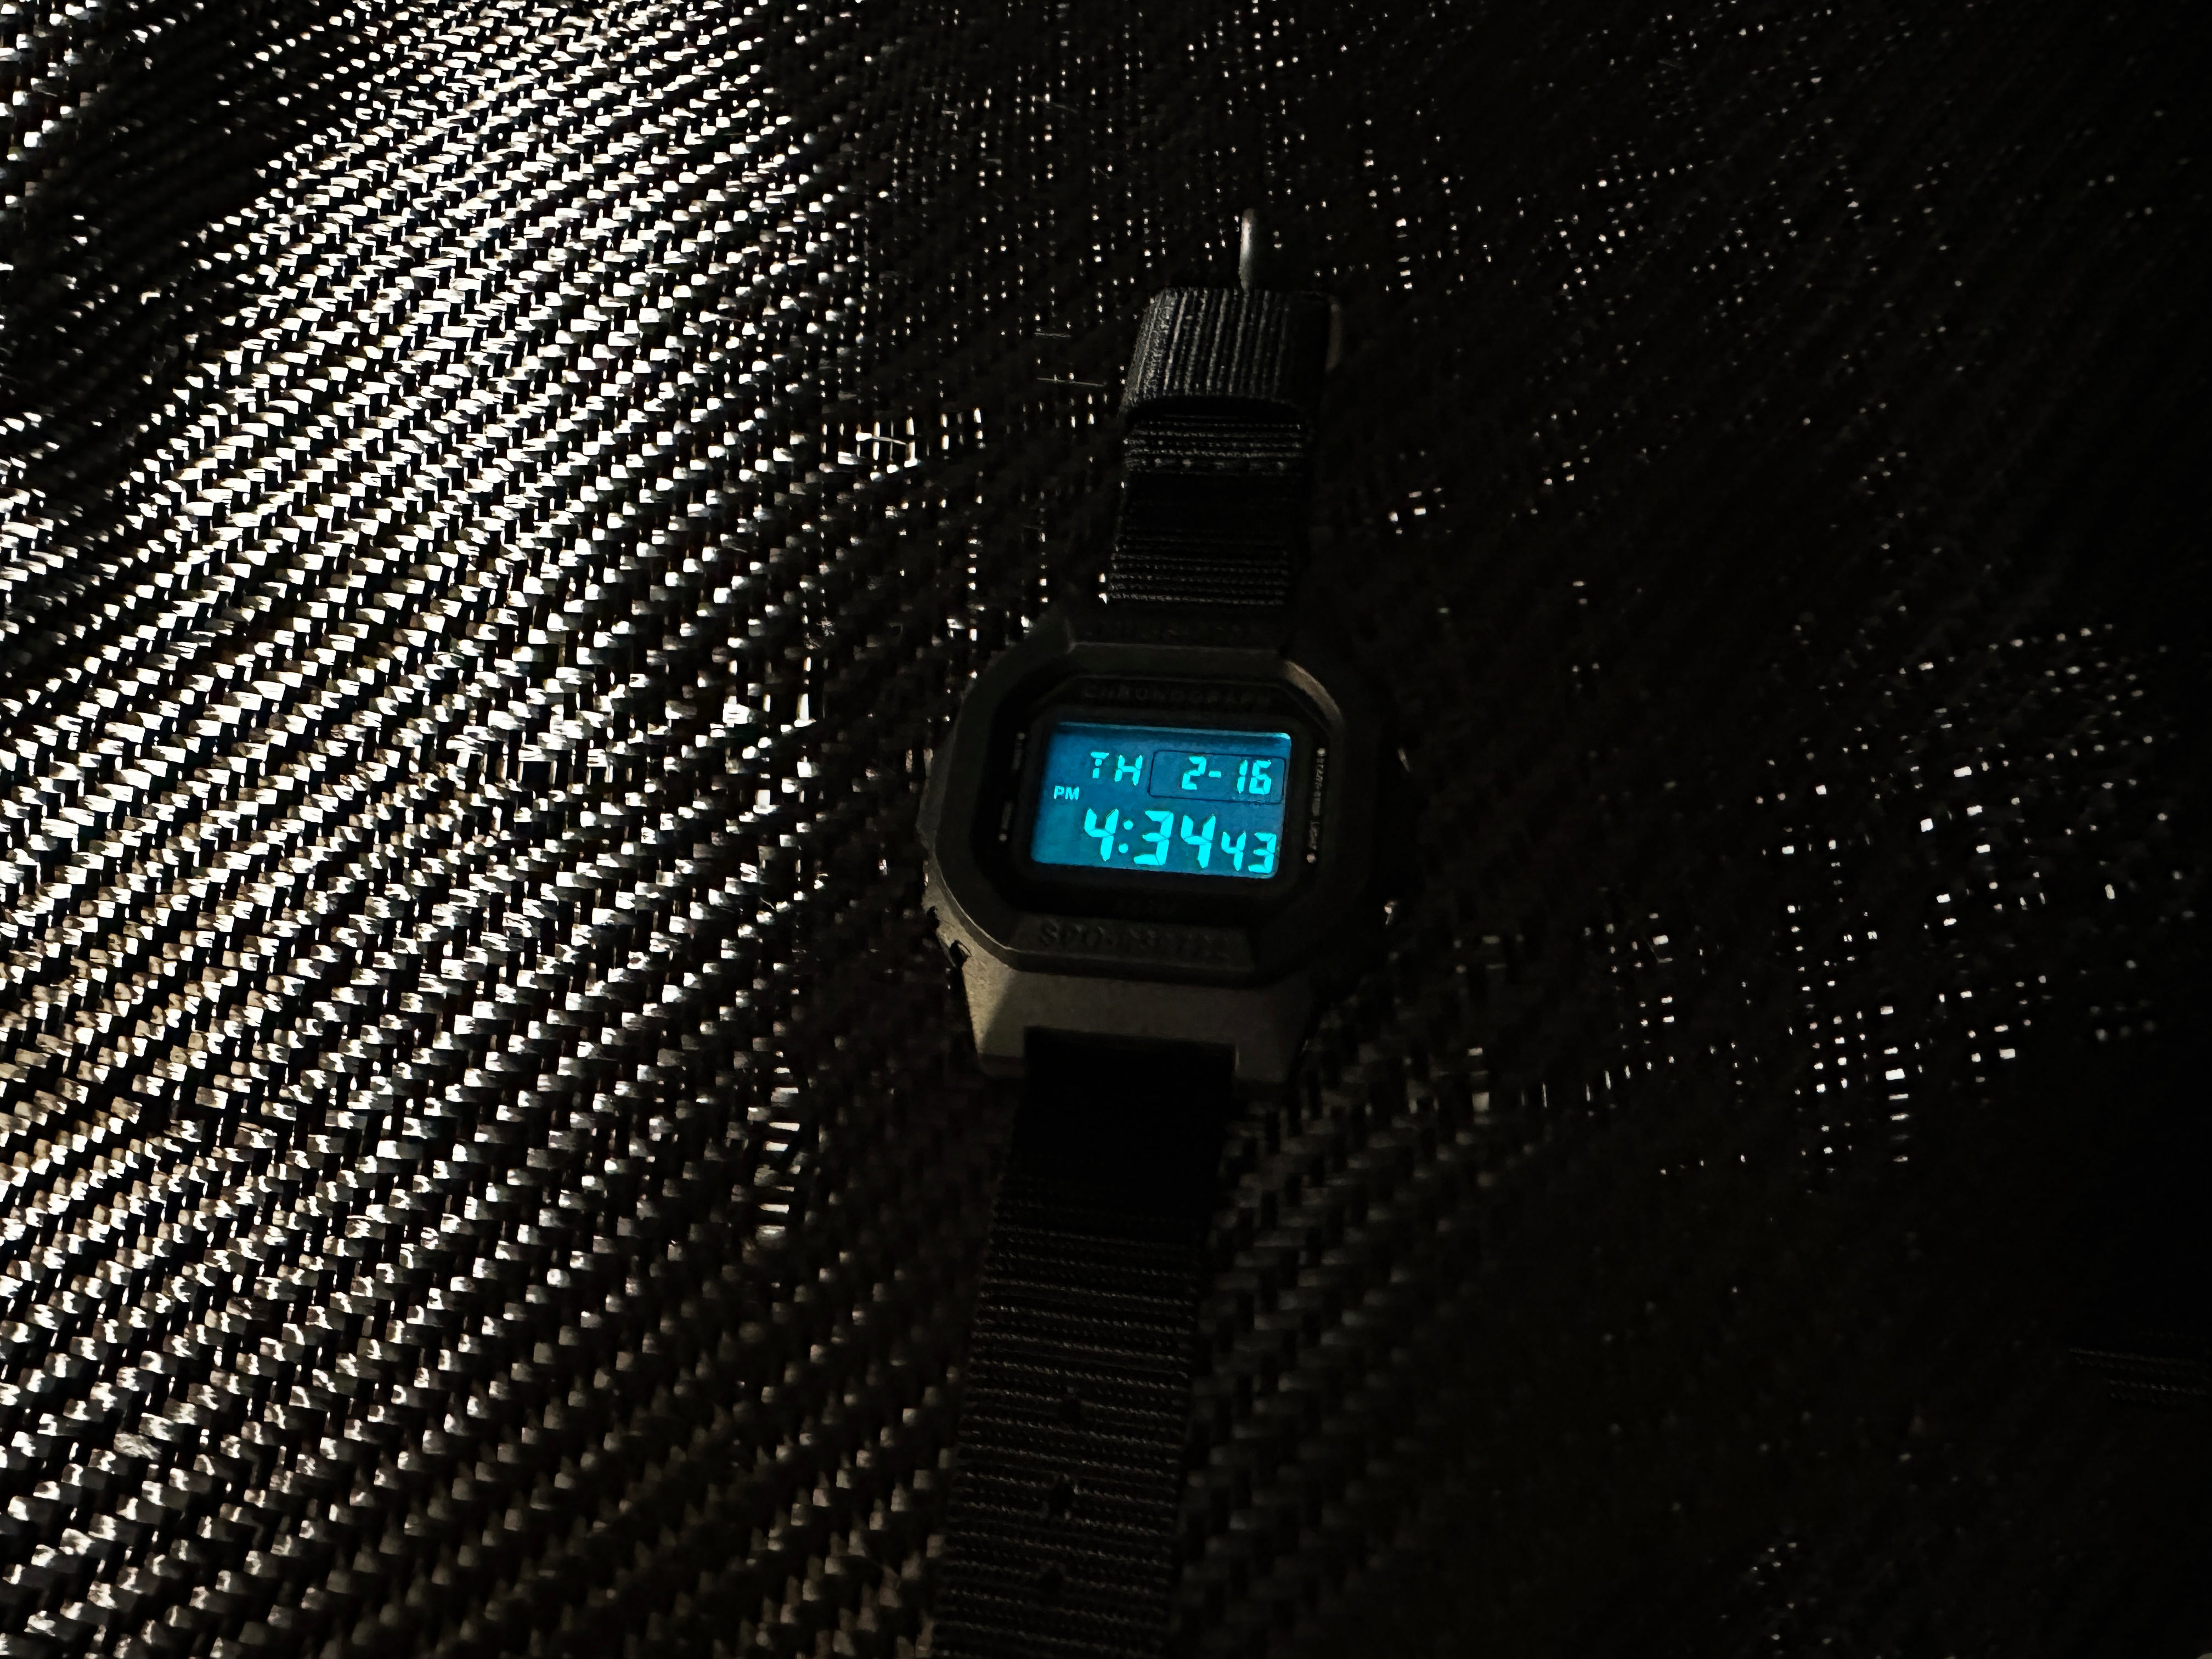 TDW - SOPMOD2 Chronograph Watch - Limited Exclusive!